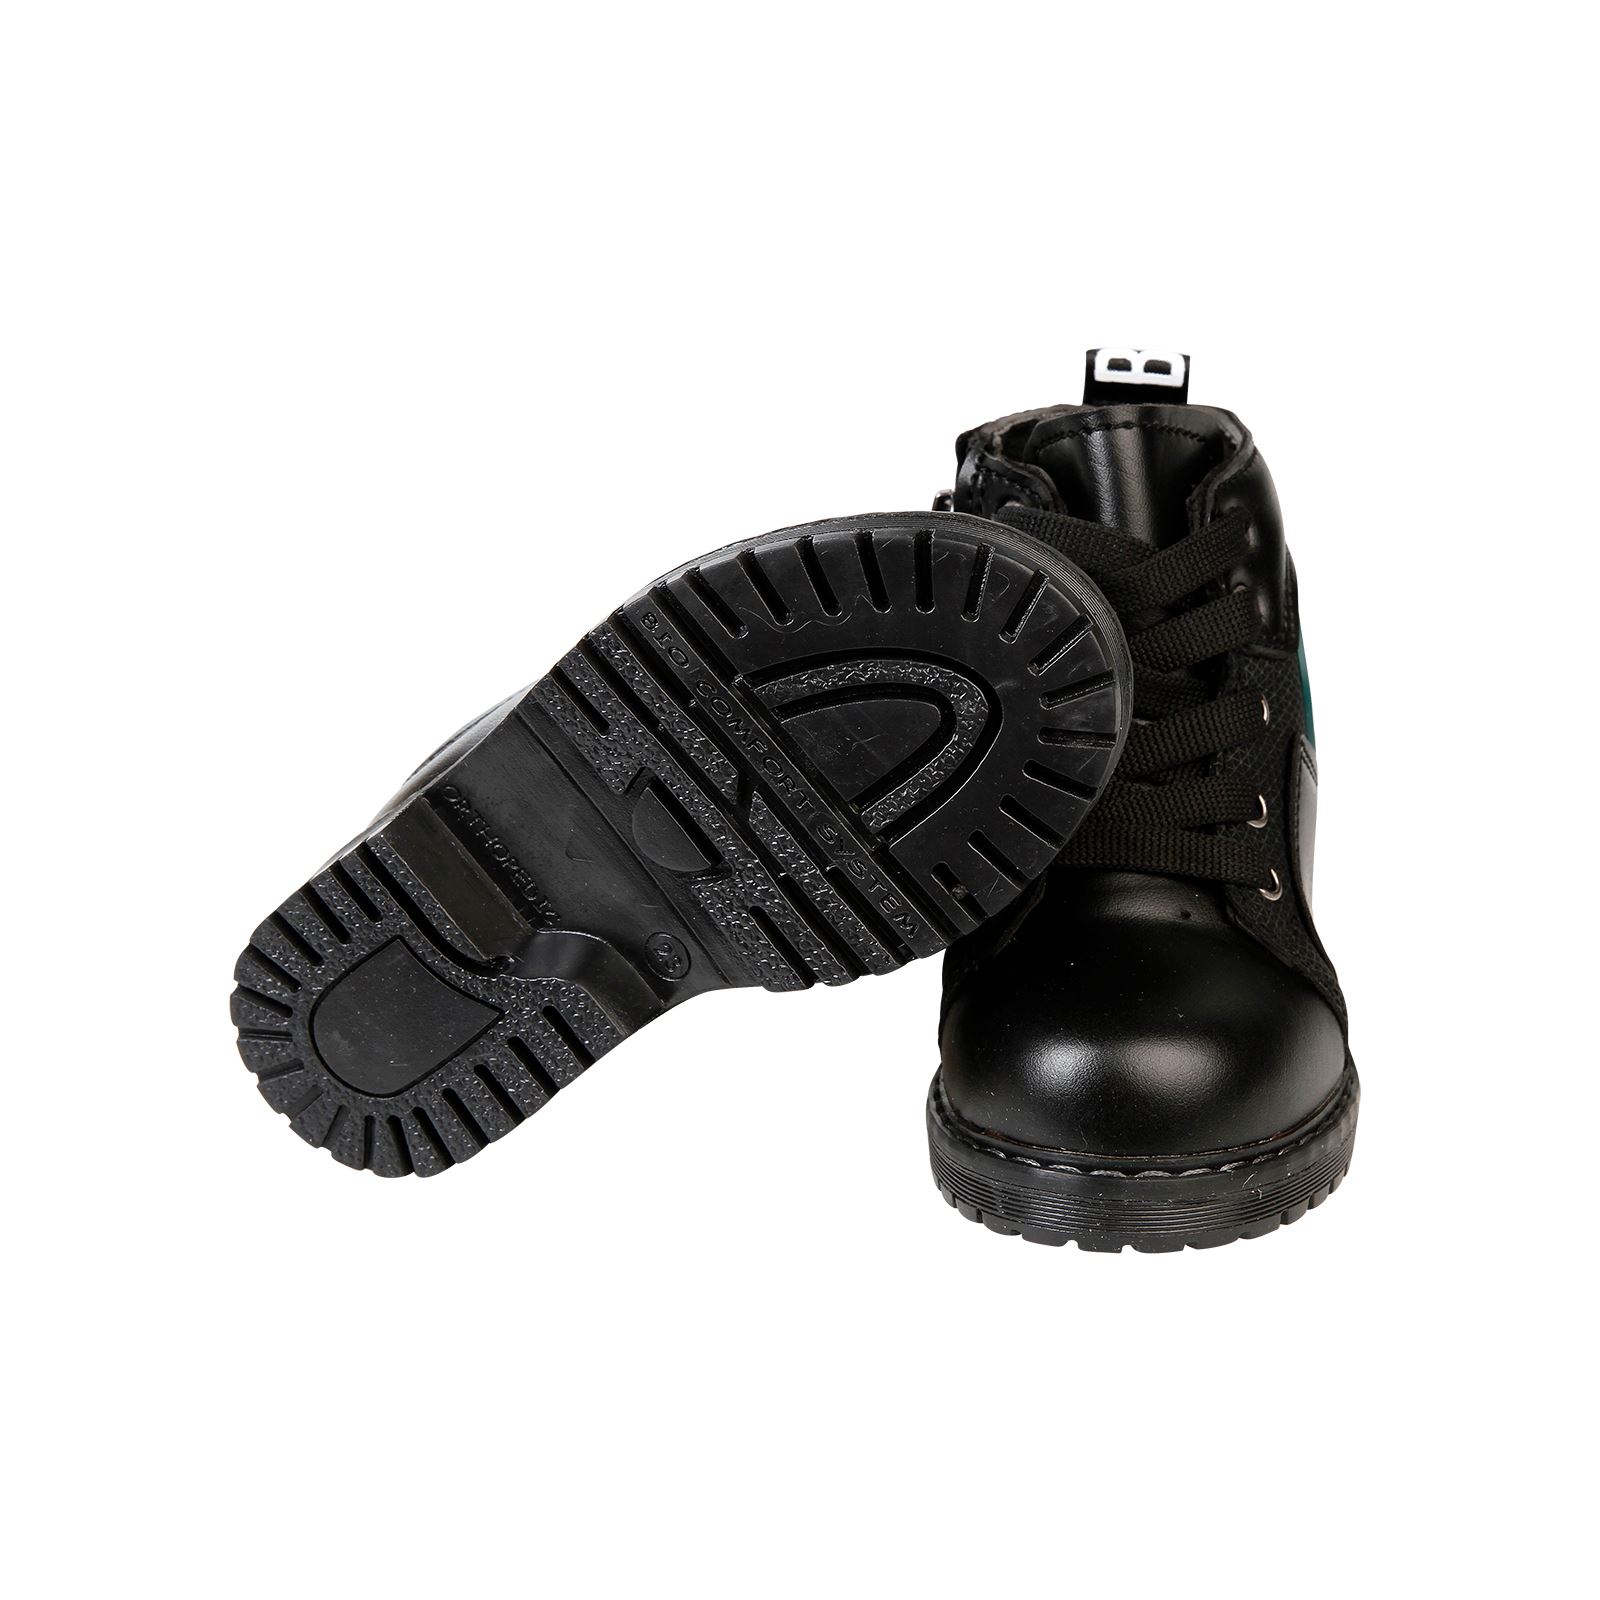 Boots Erkek Çocuk Bot 23-25 Numara Siyah